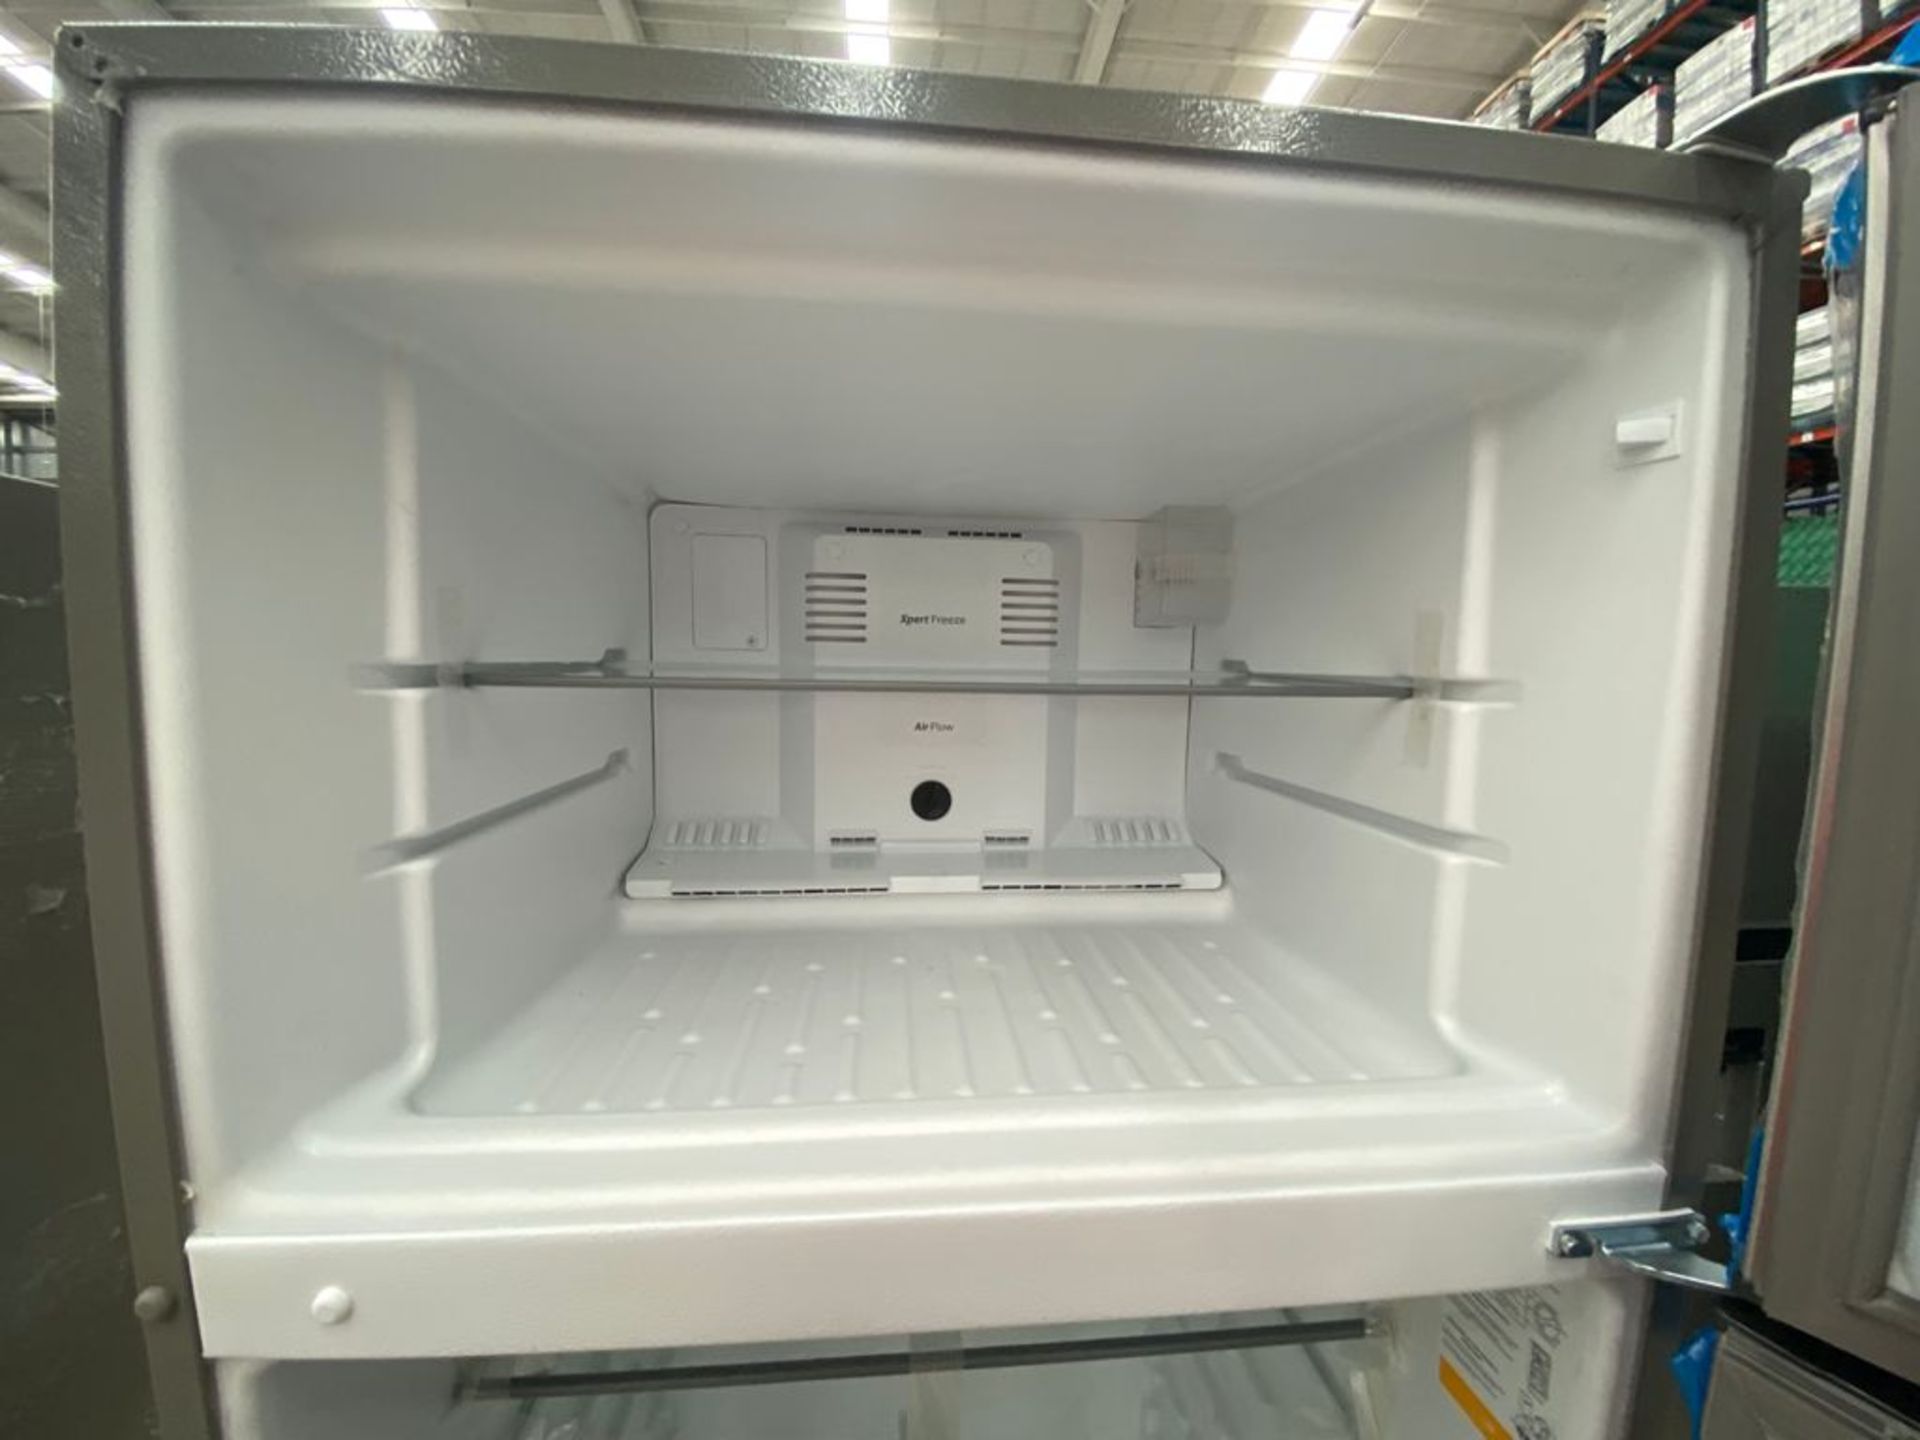 1 Refrigerador mara Whirlpool color gris modelo WT1818A N/S VSA0958925 - Image 16 of 21